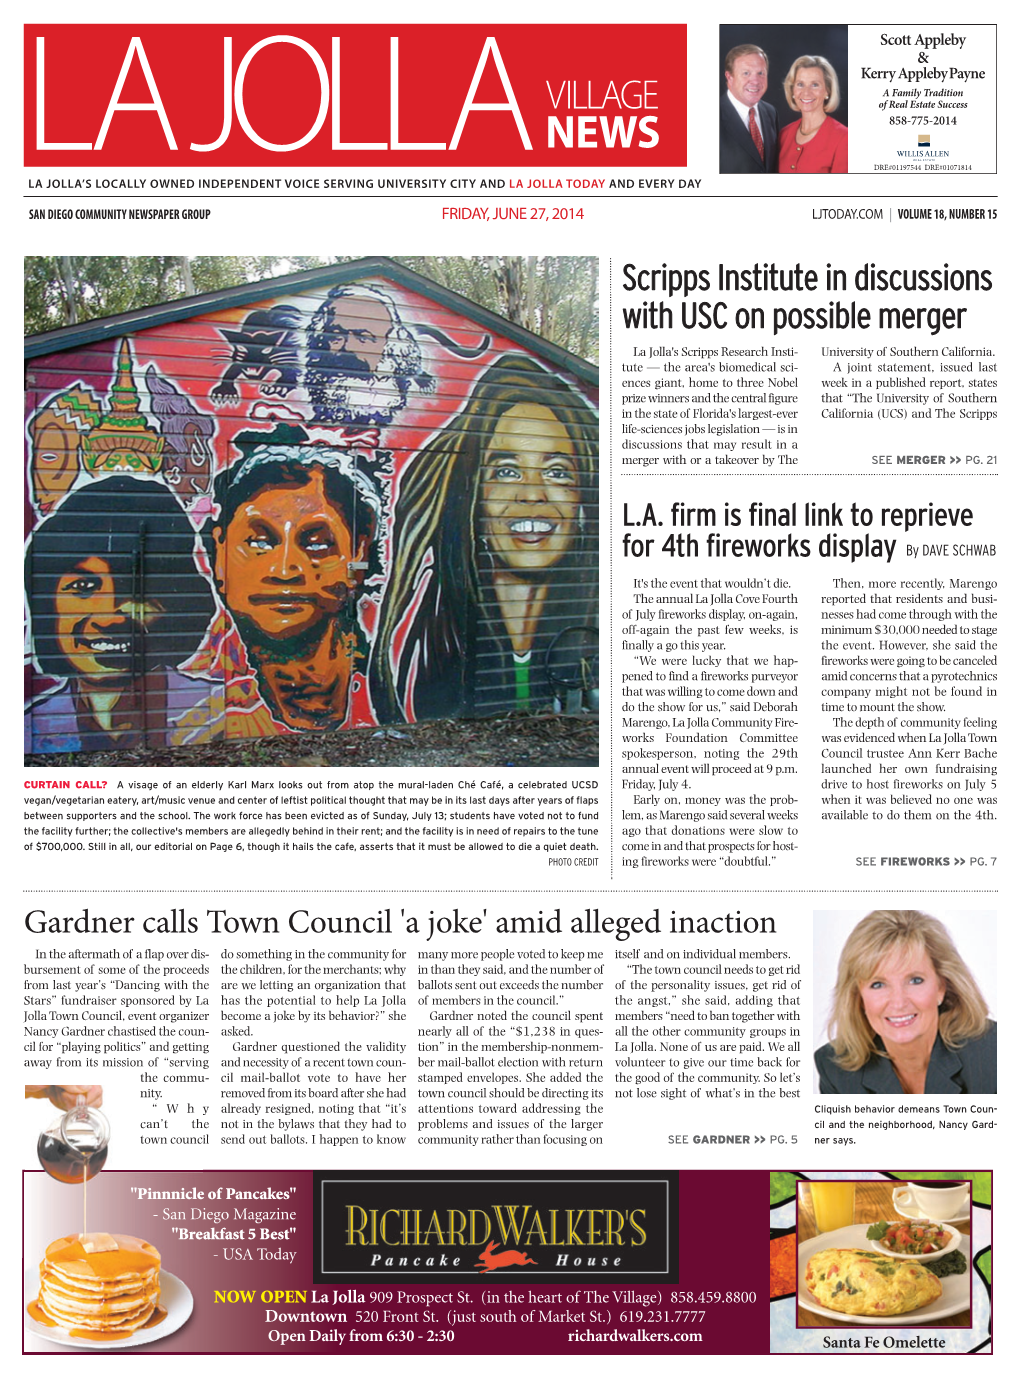 La Jolla News 858-775-2014